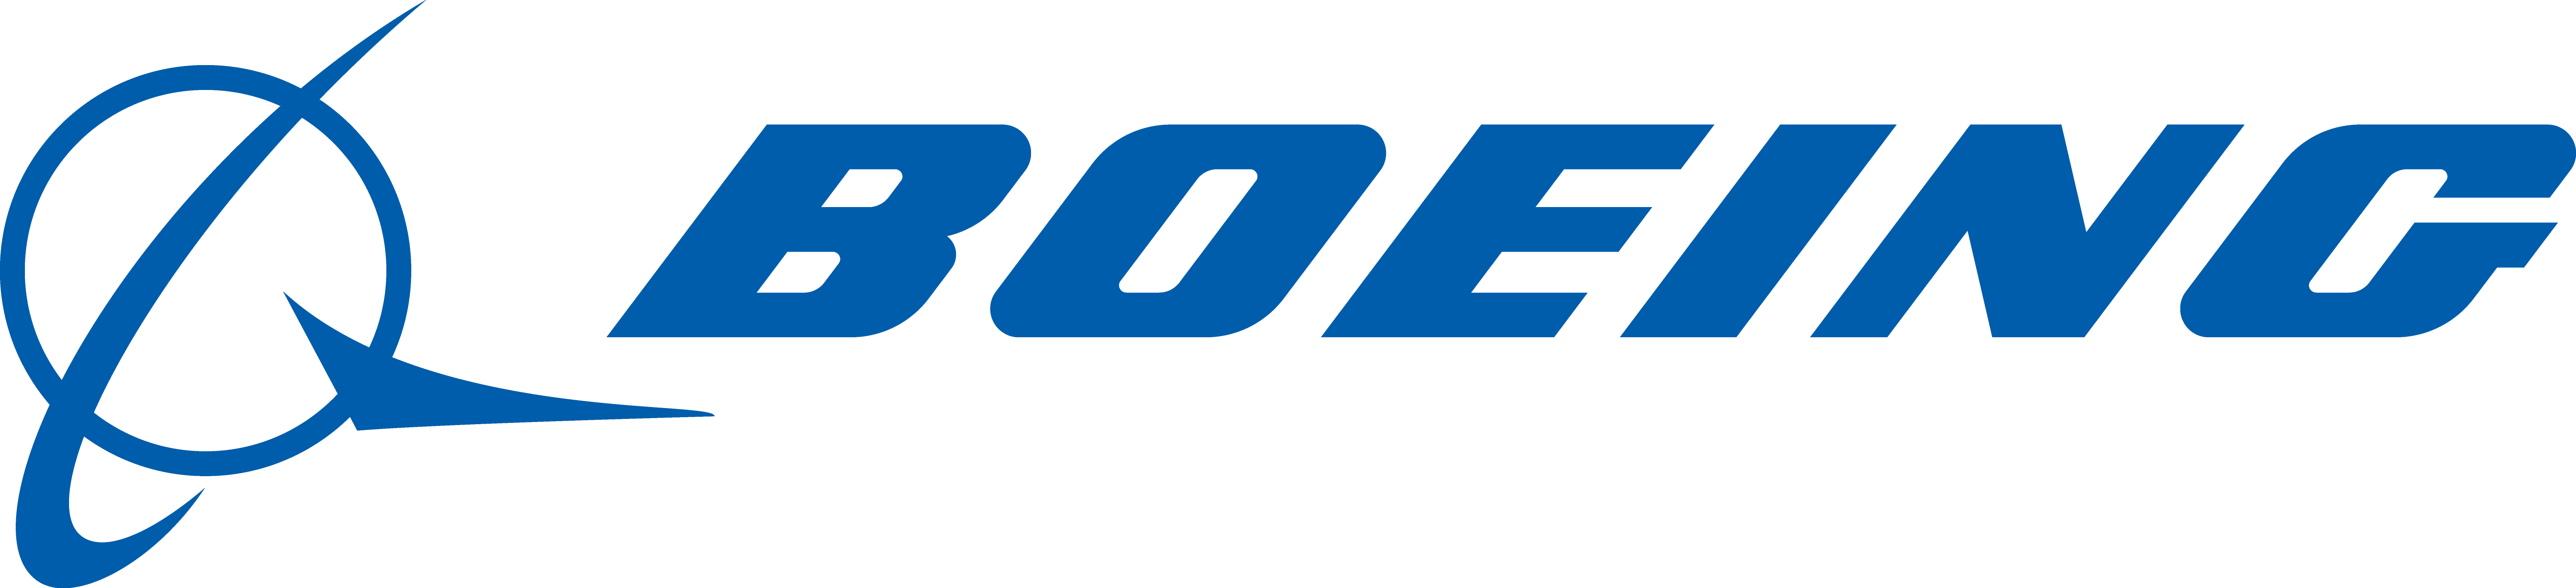 Boeing_logo_blue